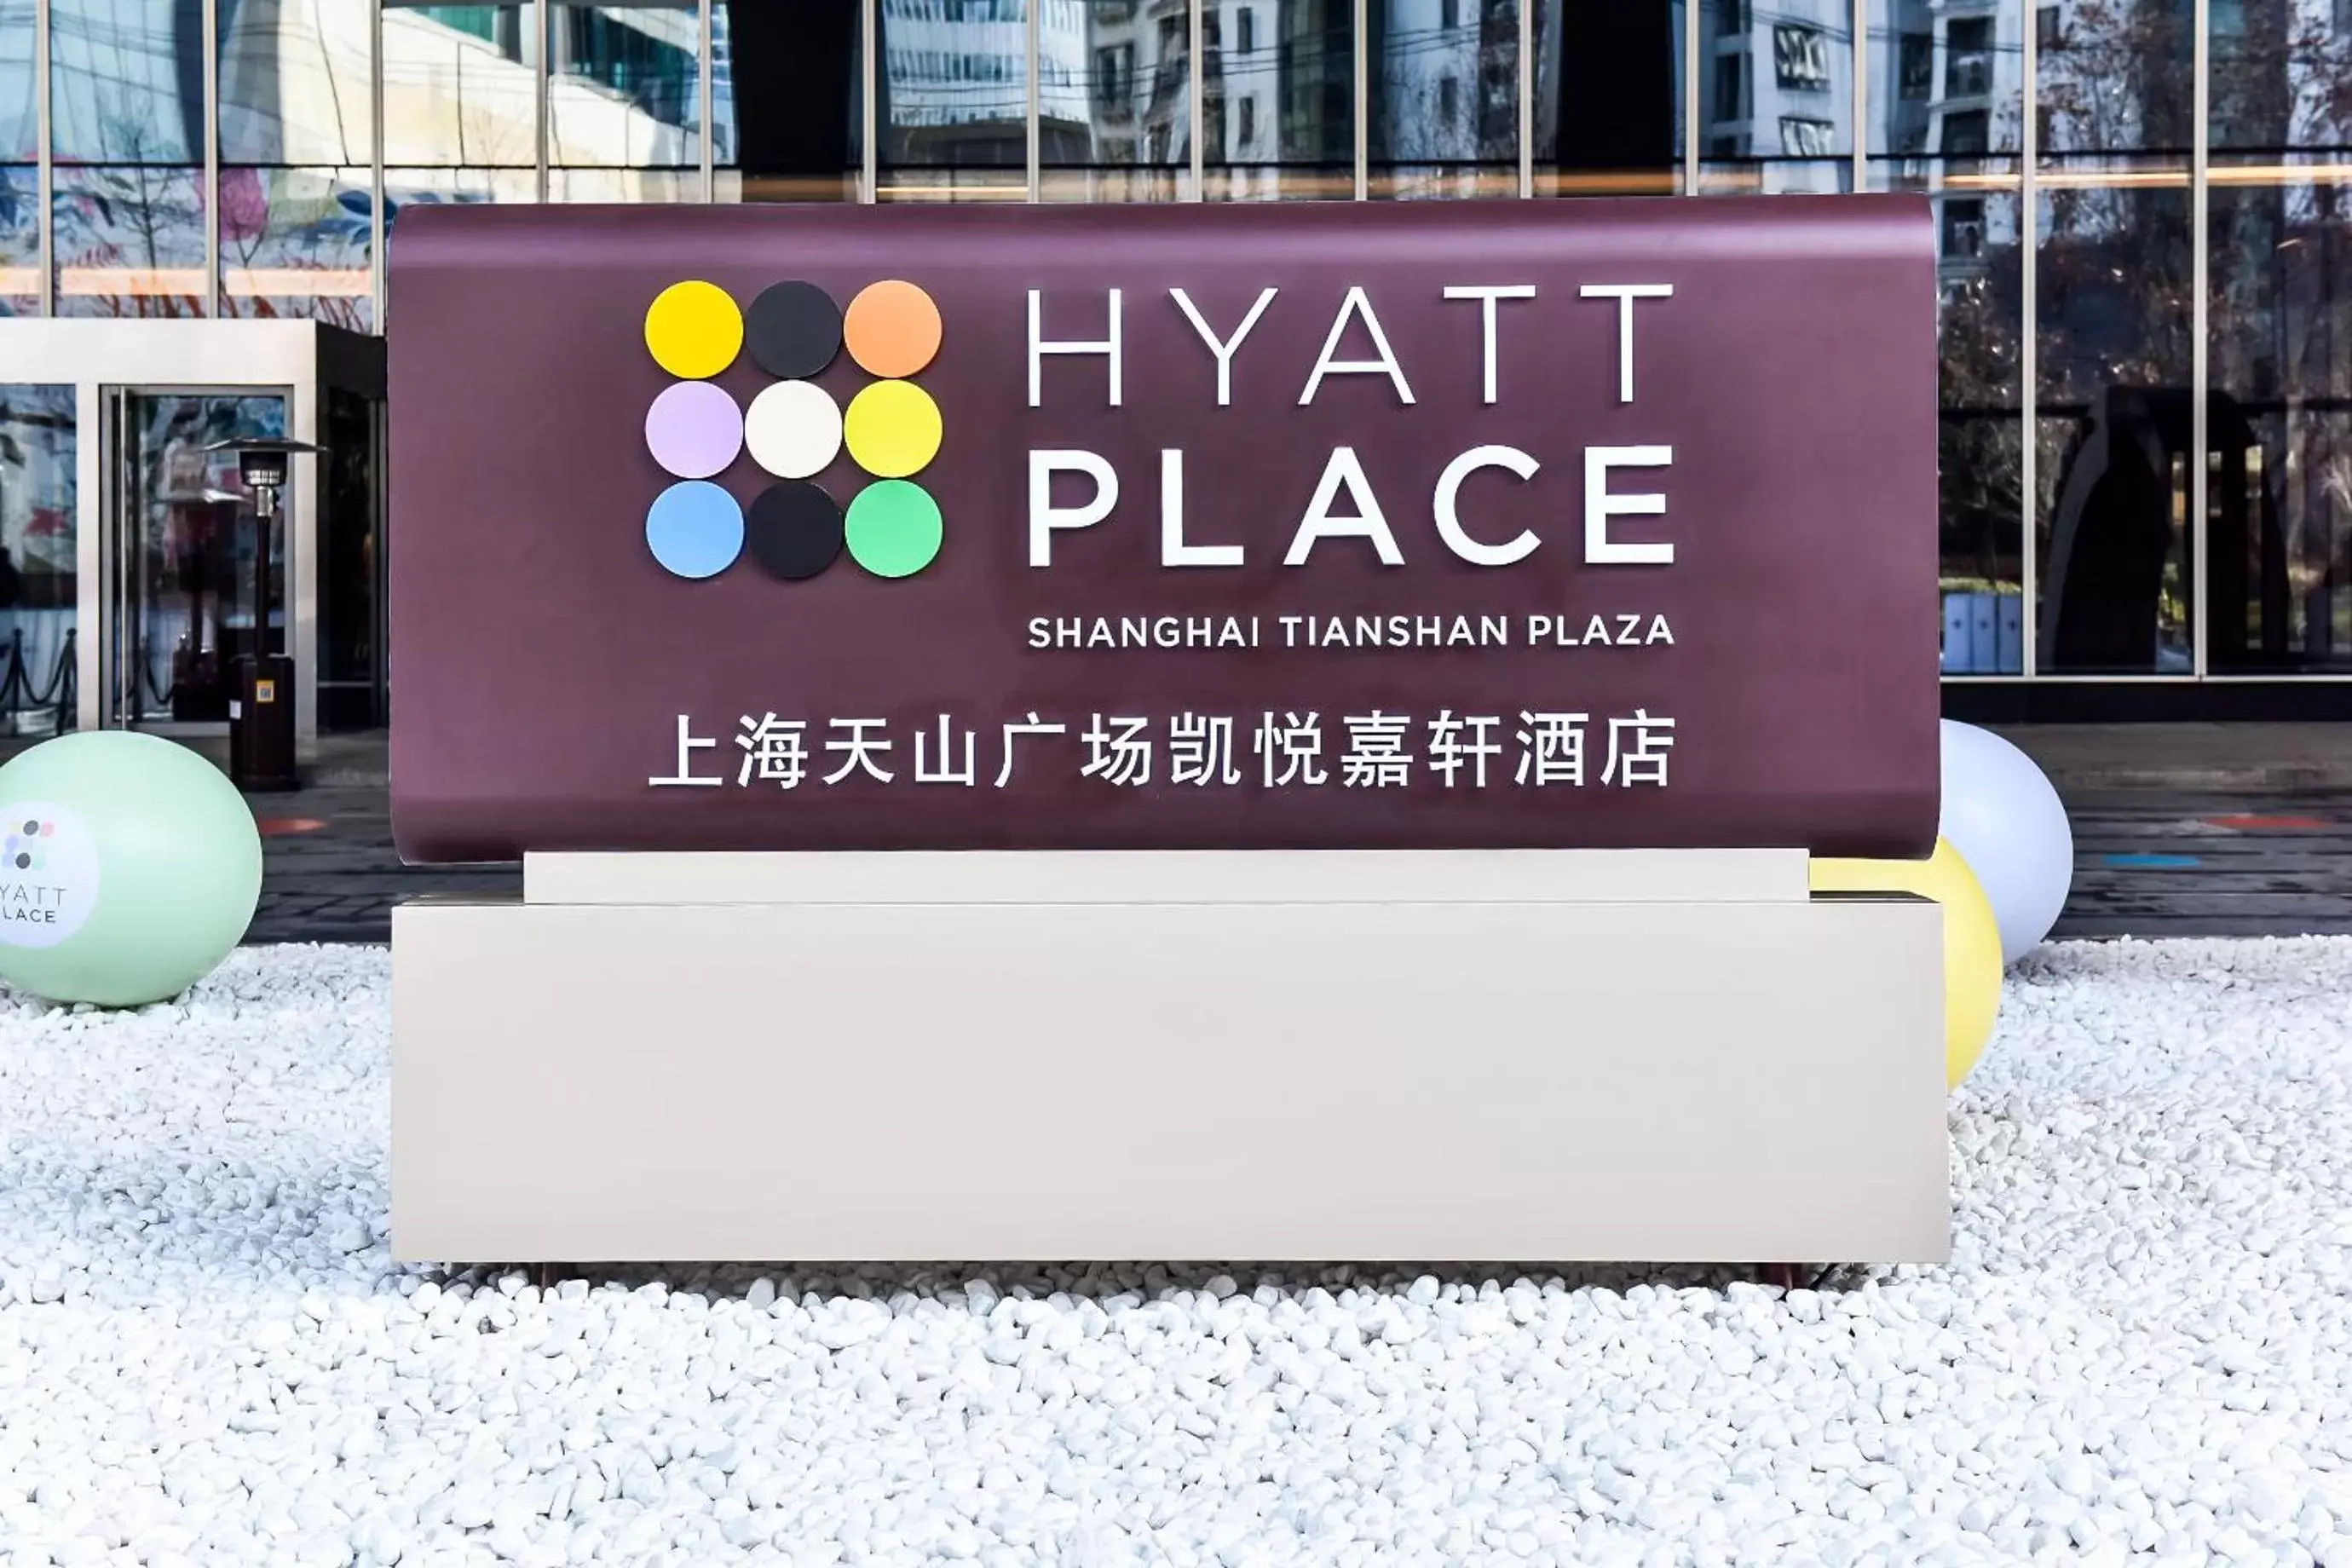 Property logo or sign in Hyatt Place Shanghai Tianshan Plaza